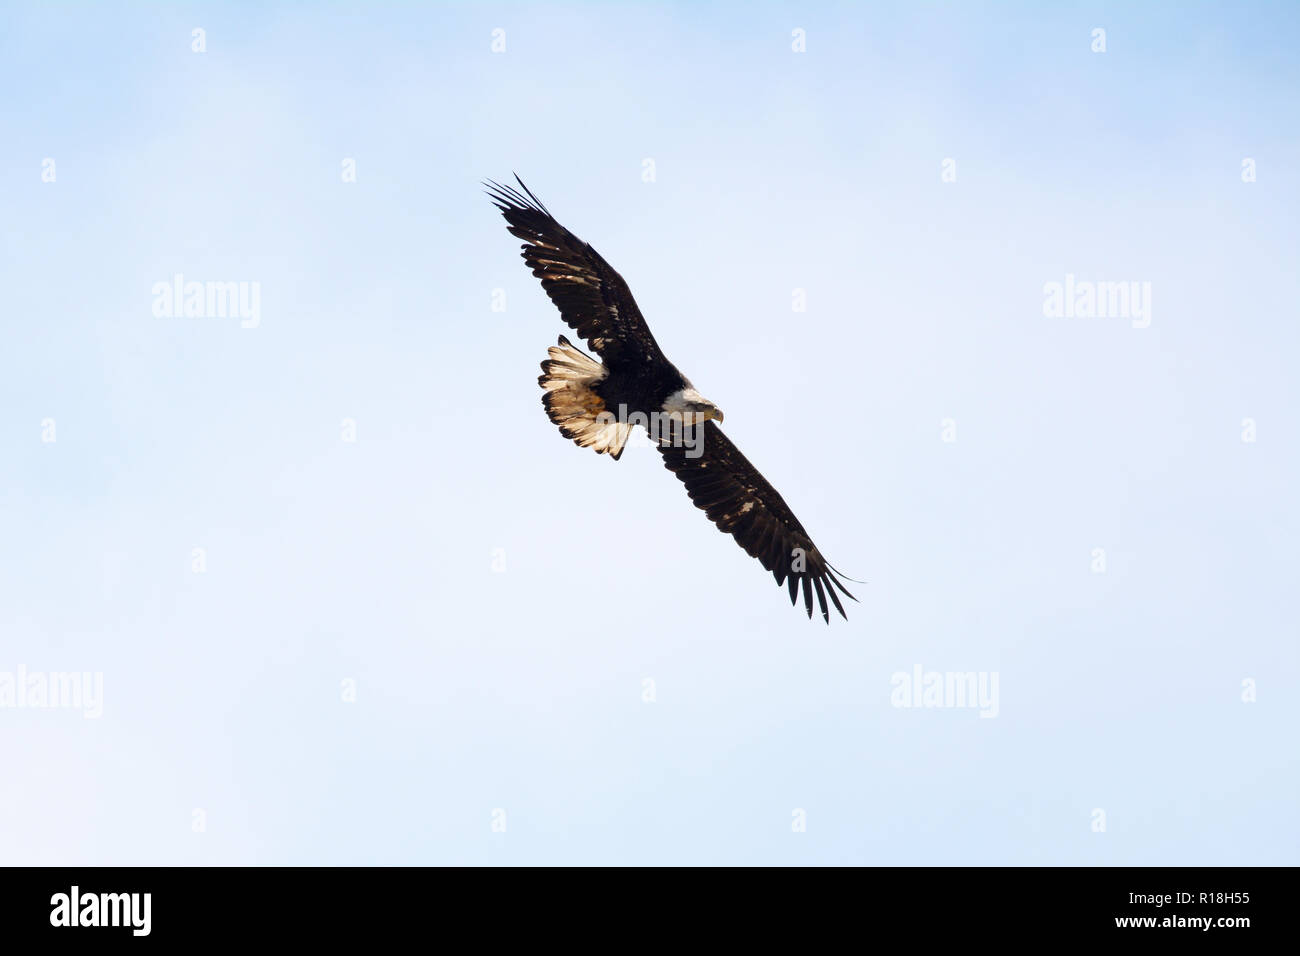 A bald eagle flying through the air above the town of Dutch Harbor, Unalaska Island, Aleutian islands chain, Alaska, United States. Stock Photo